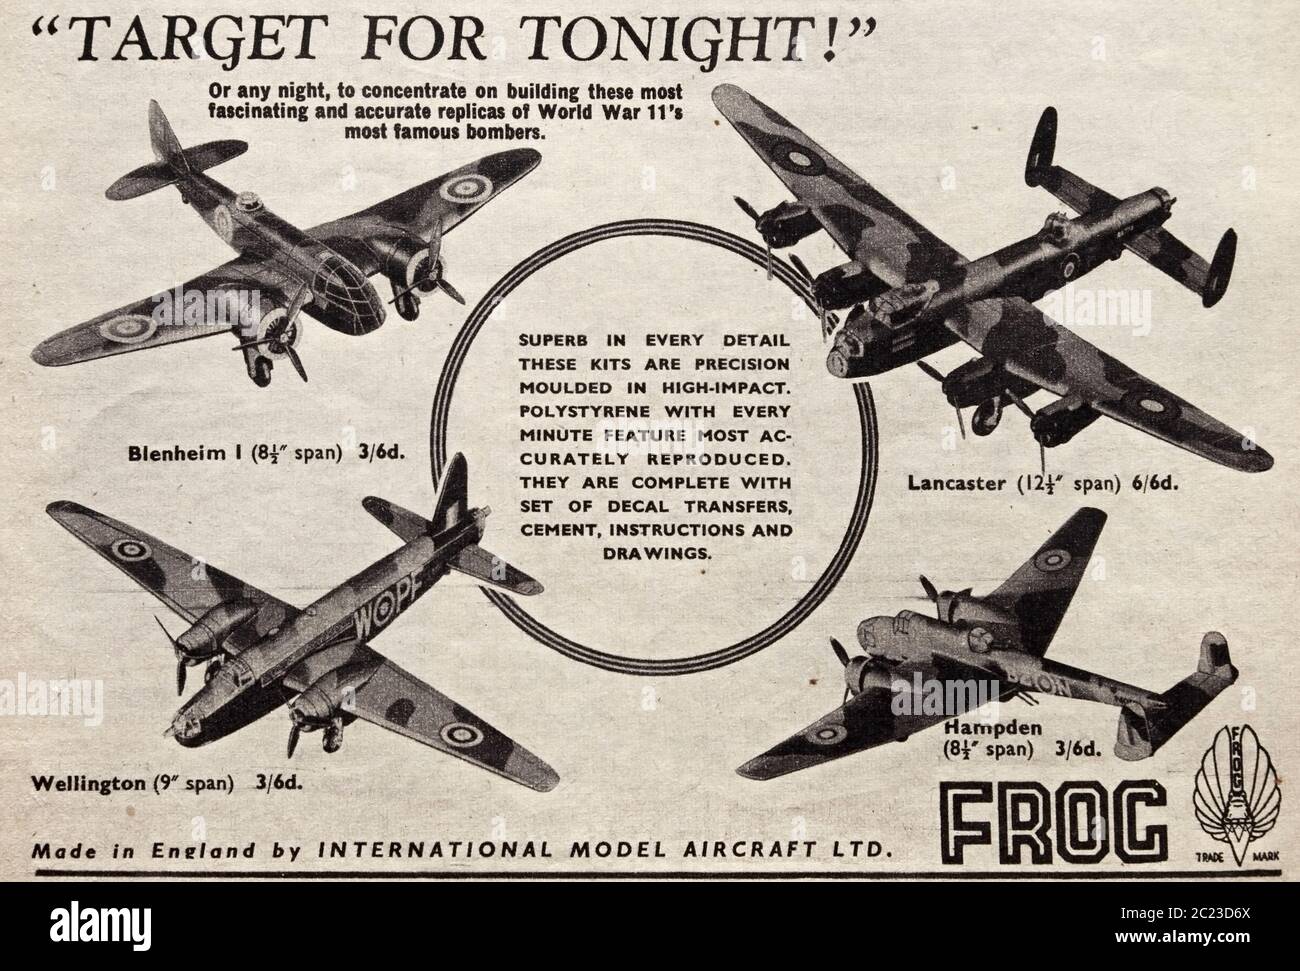 Vintage advertisement for Frog plastic model kits. Stock Photo